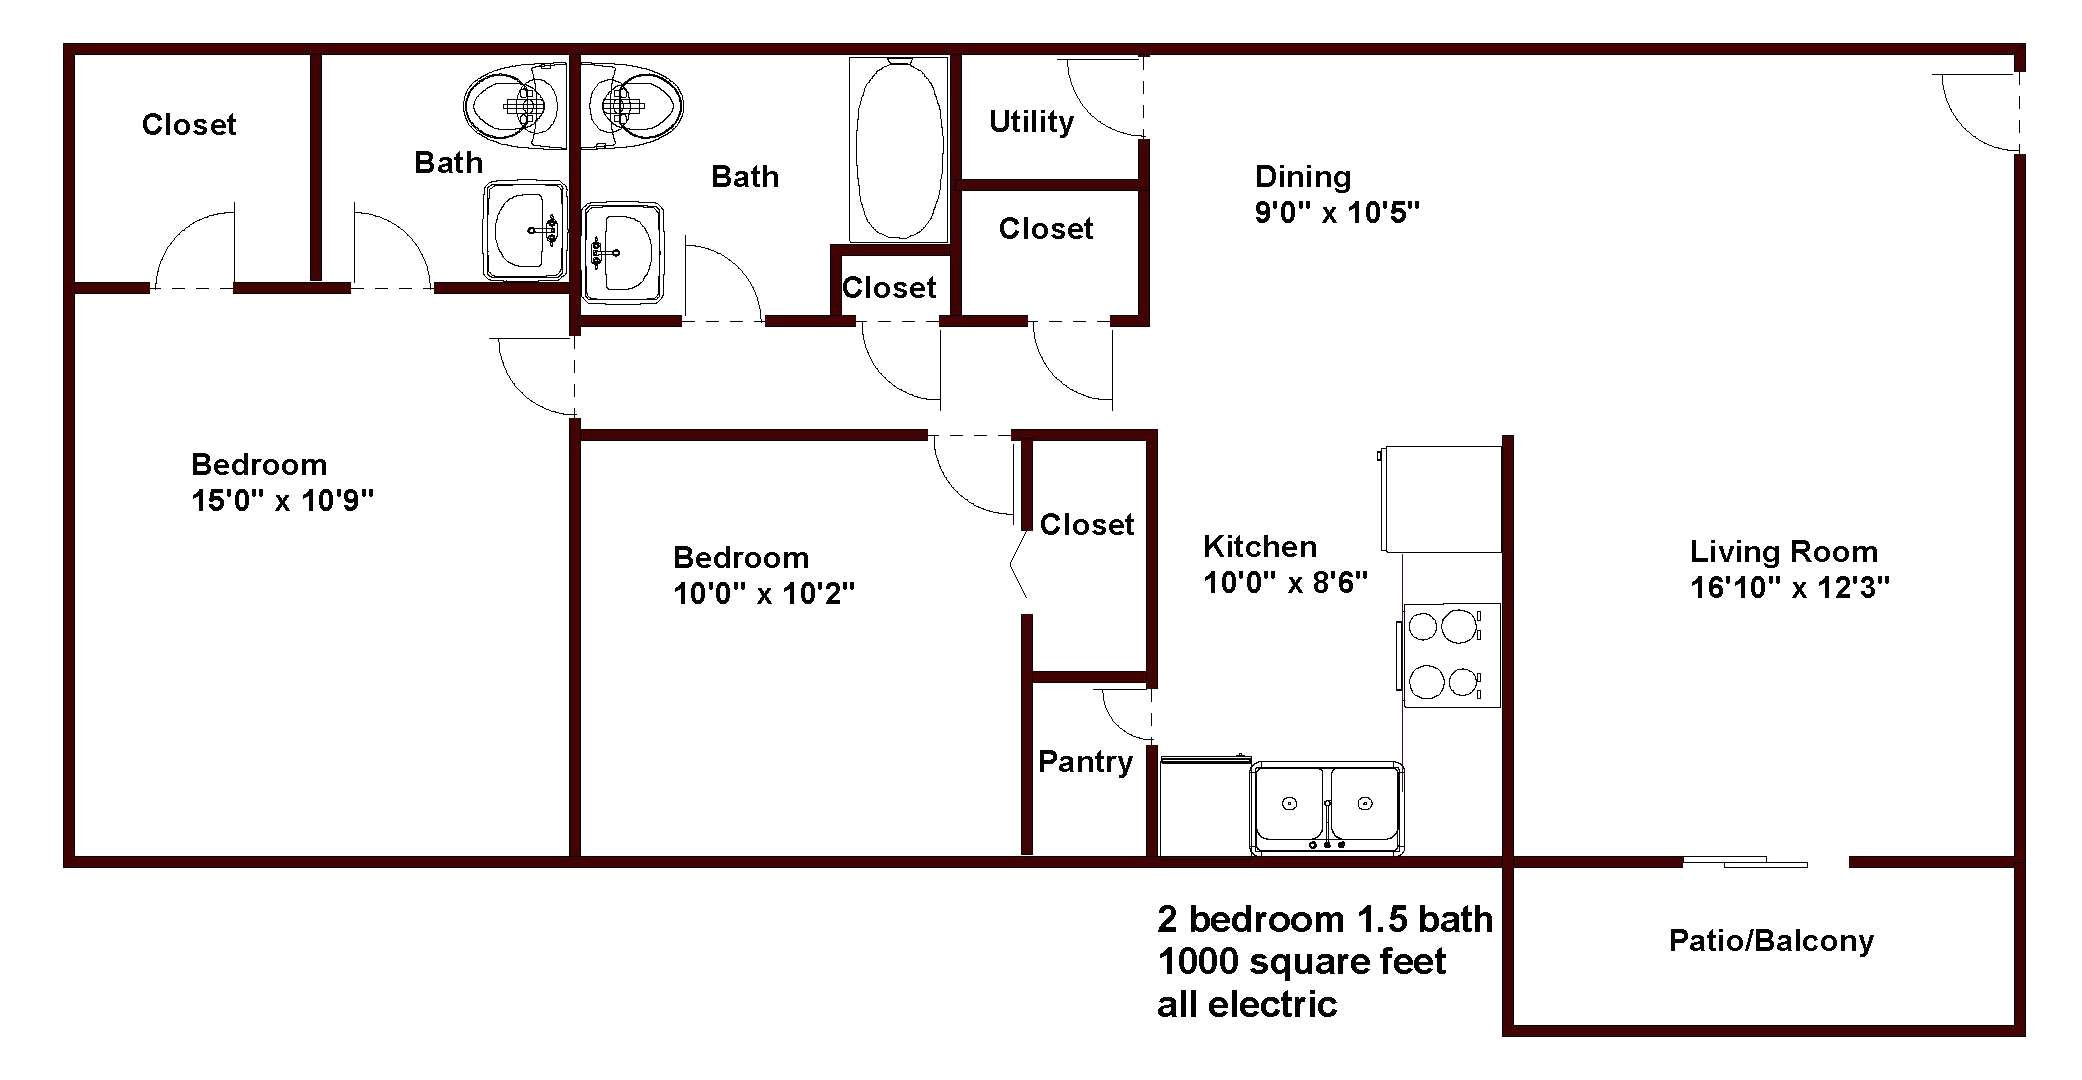 3br 2ba house plans and 2 bedroom 2 bath floor plans